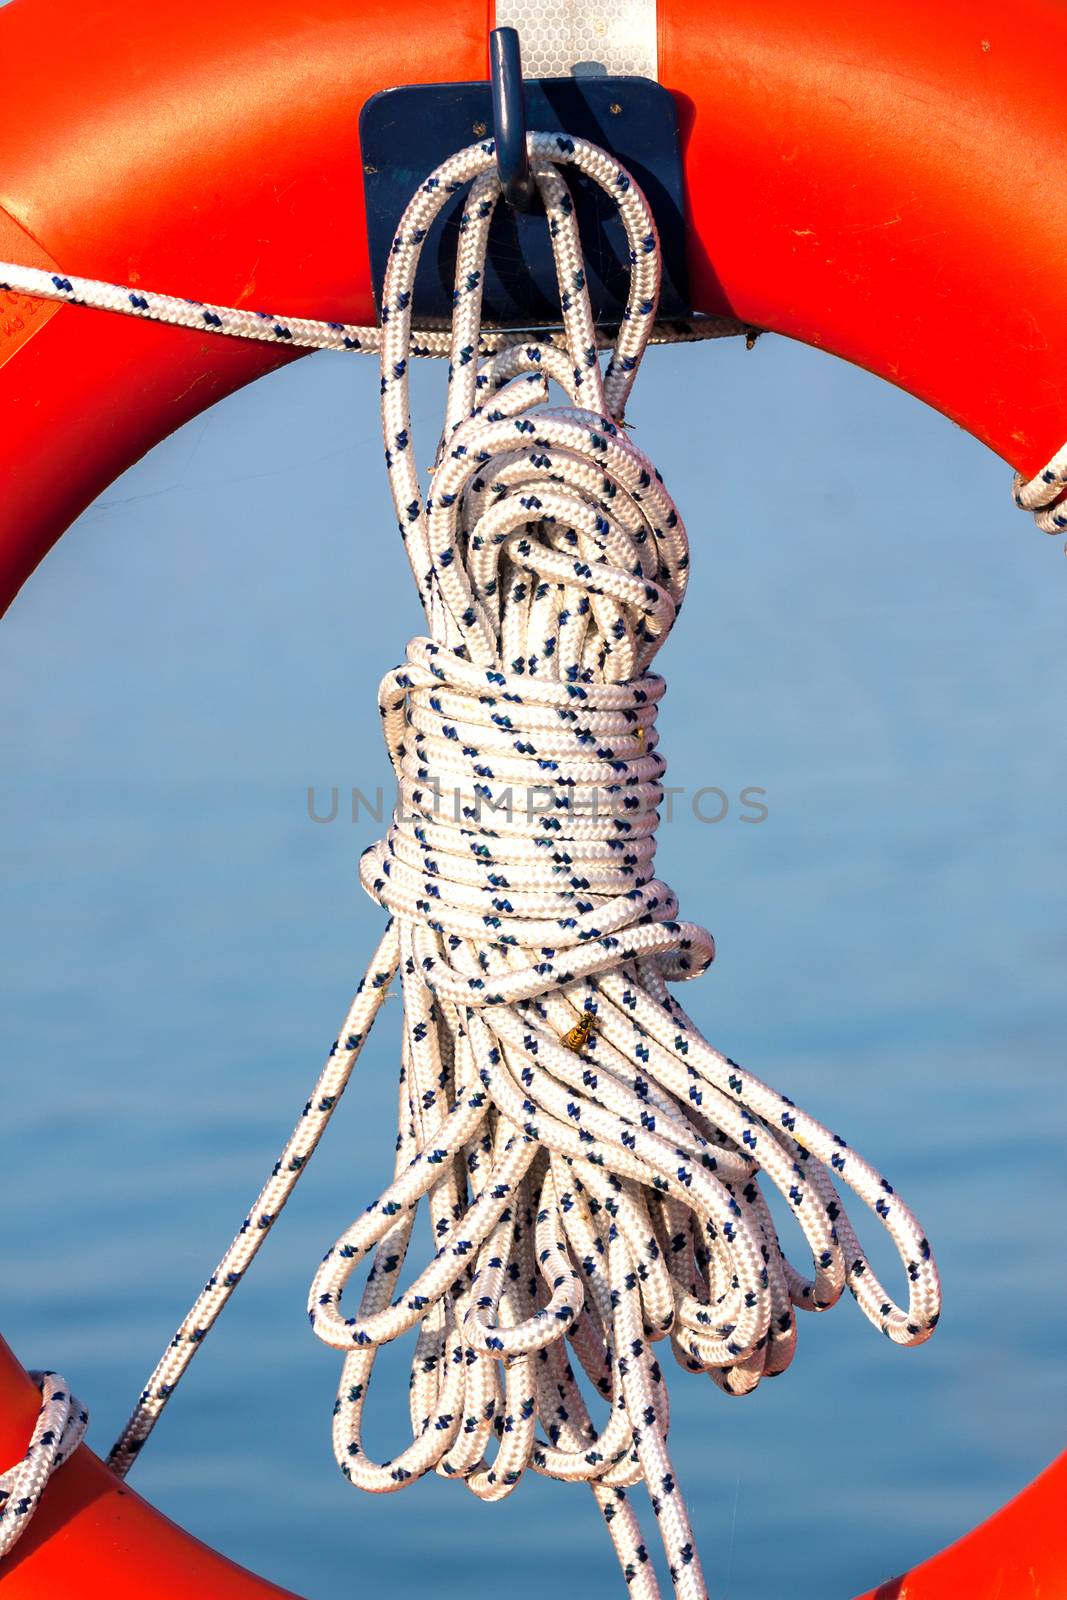 Orange life buoy with rope